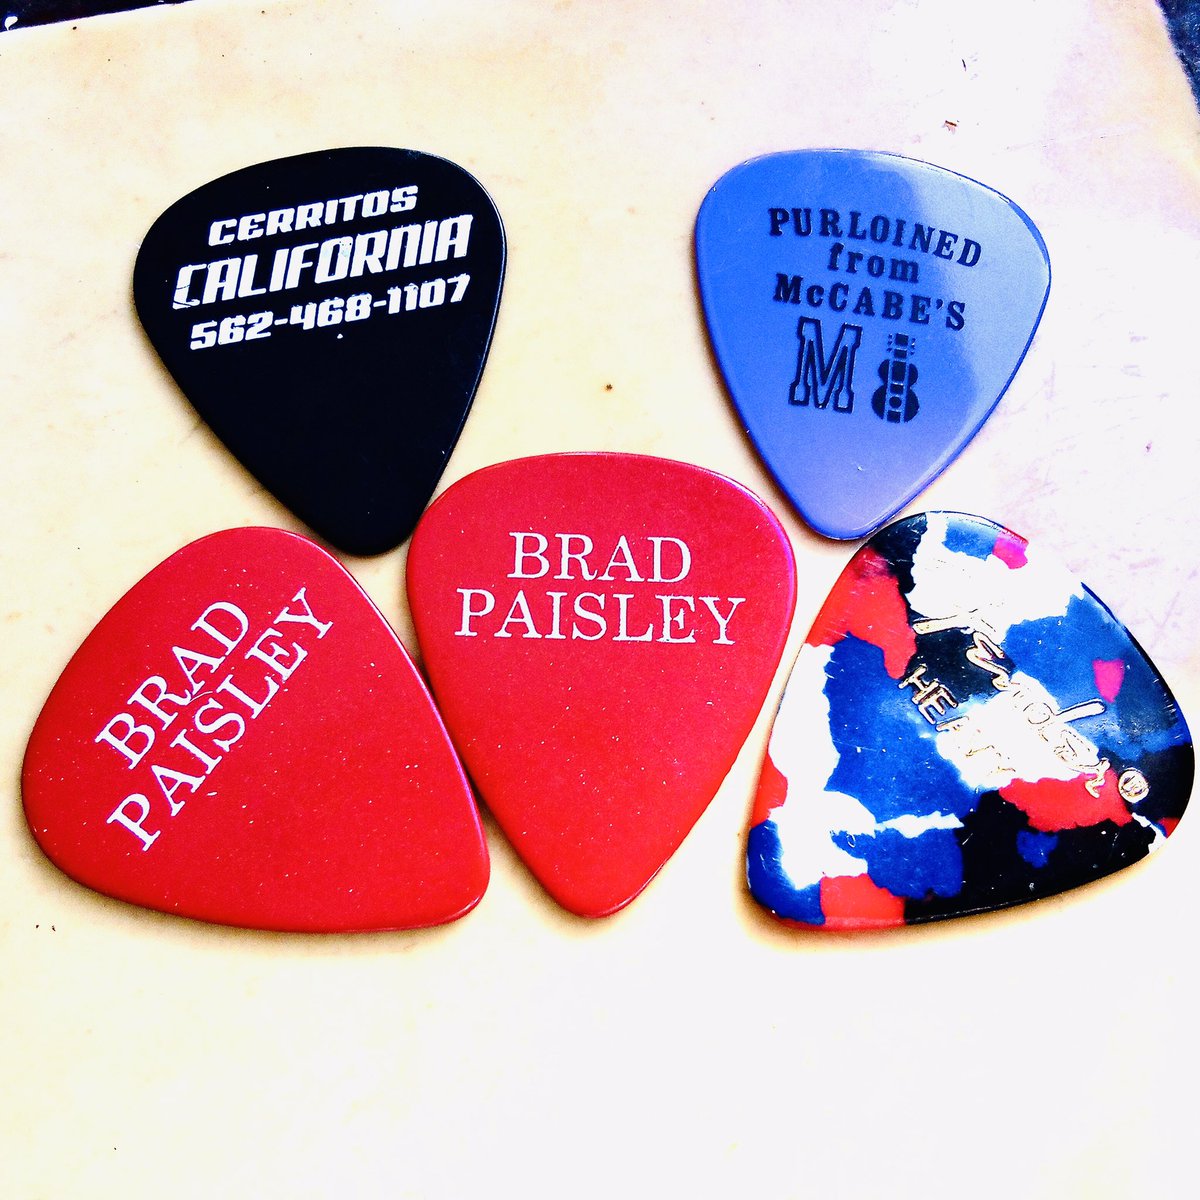 My cousin found these at Nashville airport. Wonder if Brad wants his picks back? いとこはナッシュヴィルの空港で拾ってもらった。ブラッド・ペイズリーは返してほしたがっていらっしゃるかな？

#guitarpicks 
#purloinedfrommccabes 
#bradpaisley 
#cerritoscalifornia 
#fenderheavy